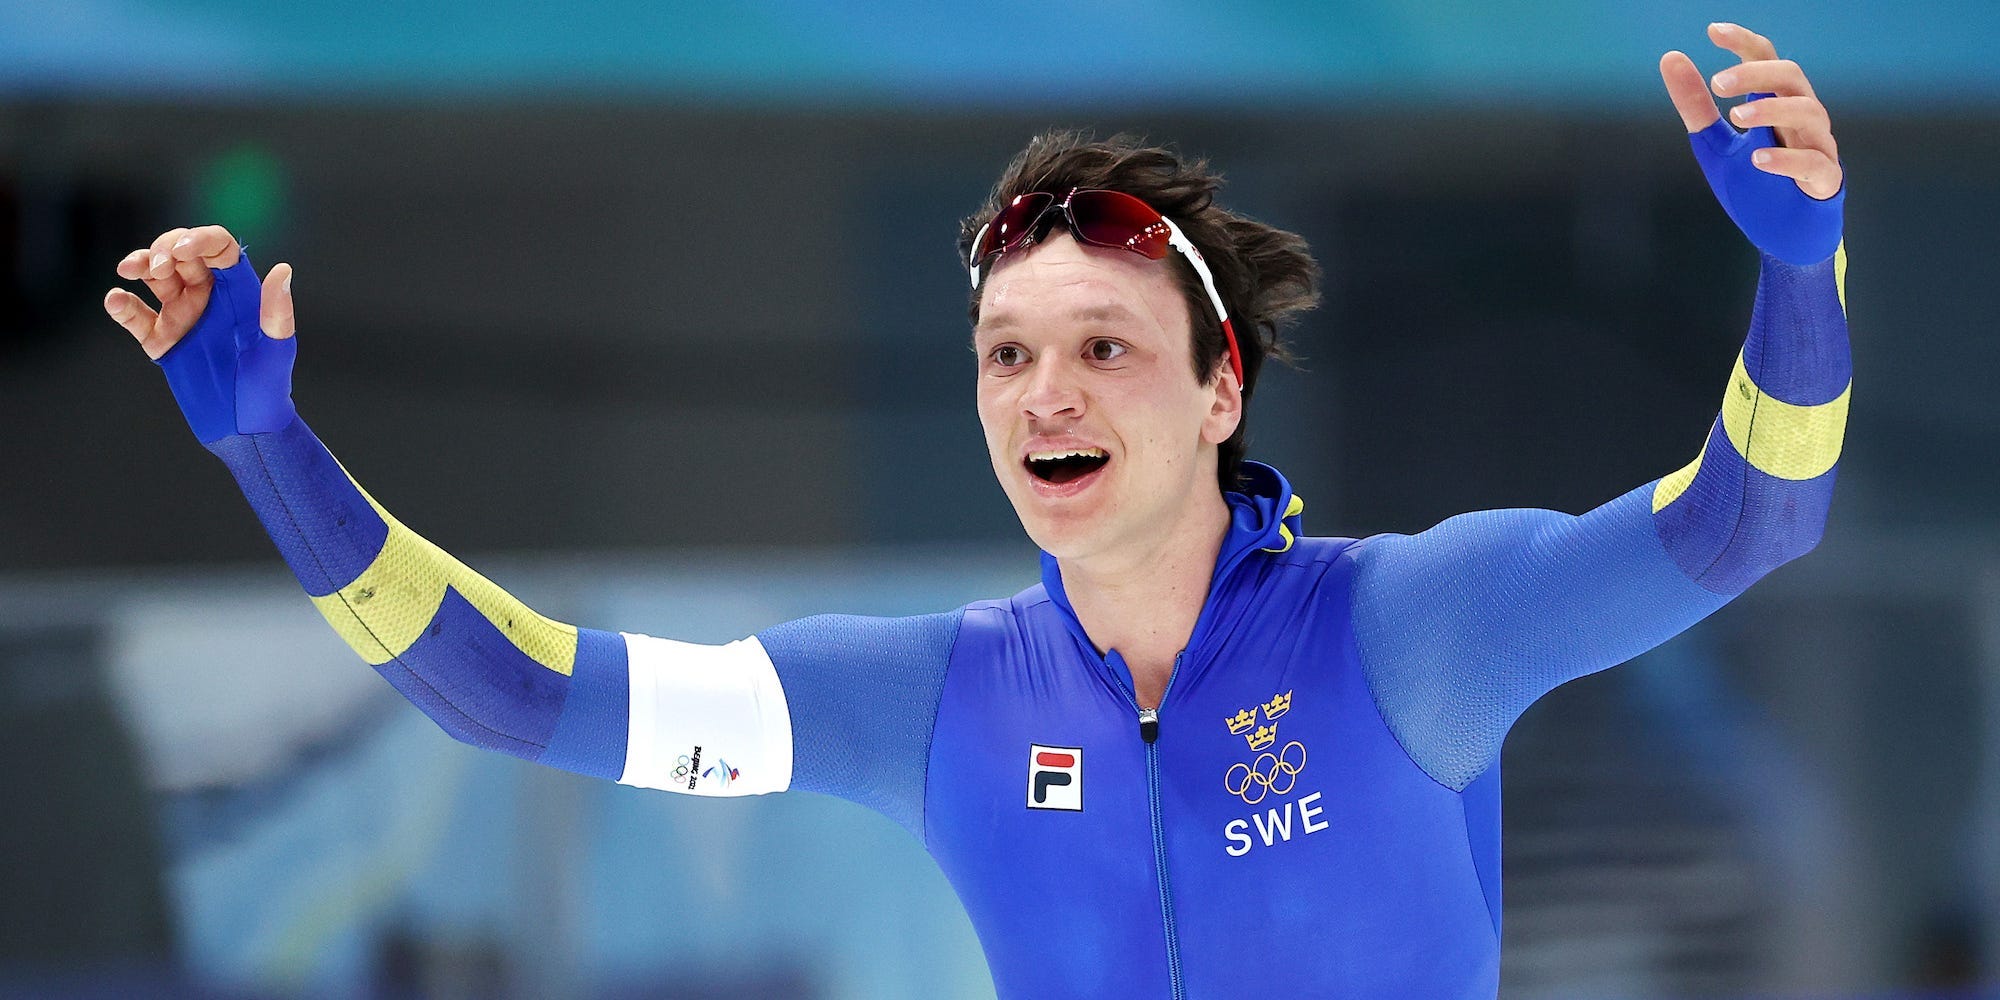 Nils van der Poel reacts after winning the gold medal in the 5,000 meter speed skate.